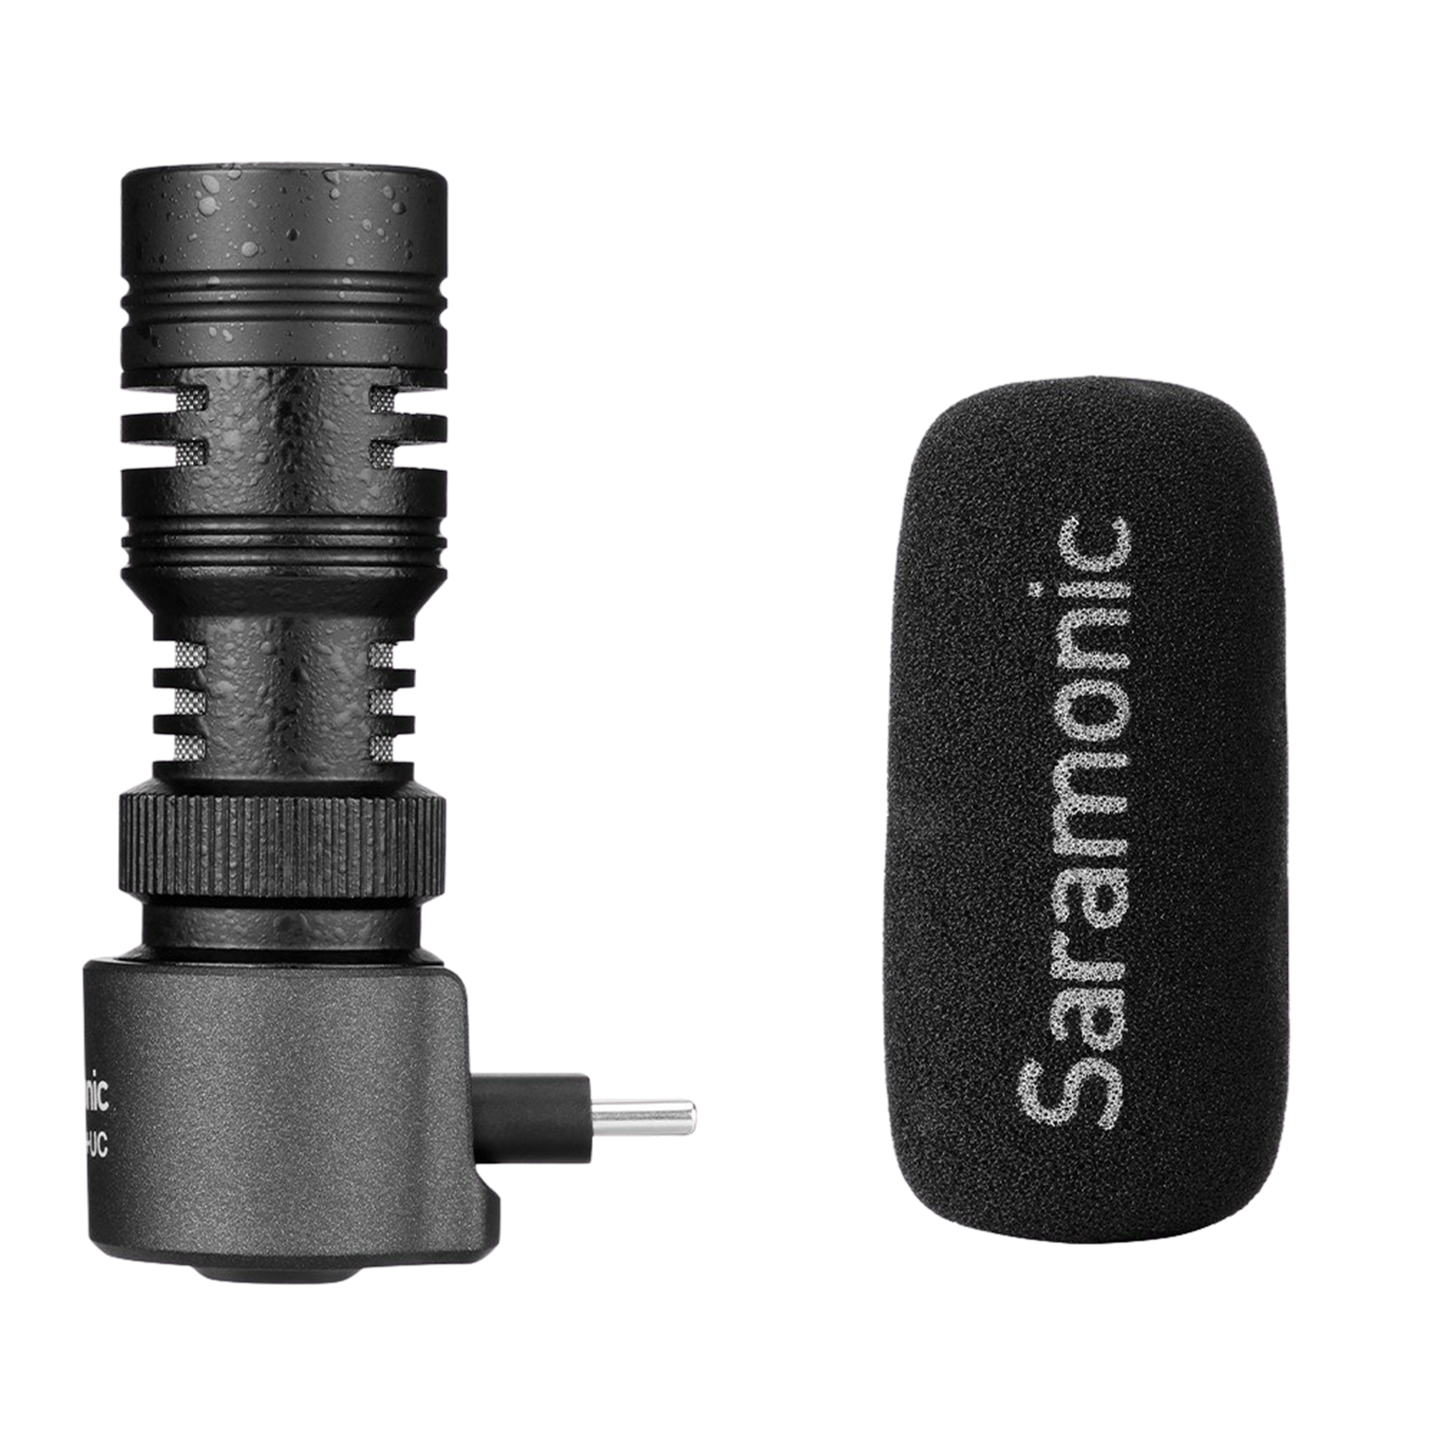 Saramonic SmartMic+ microphone for smartphones